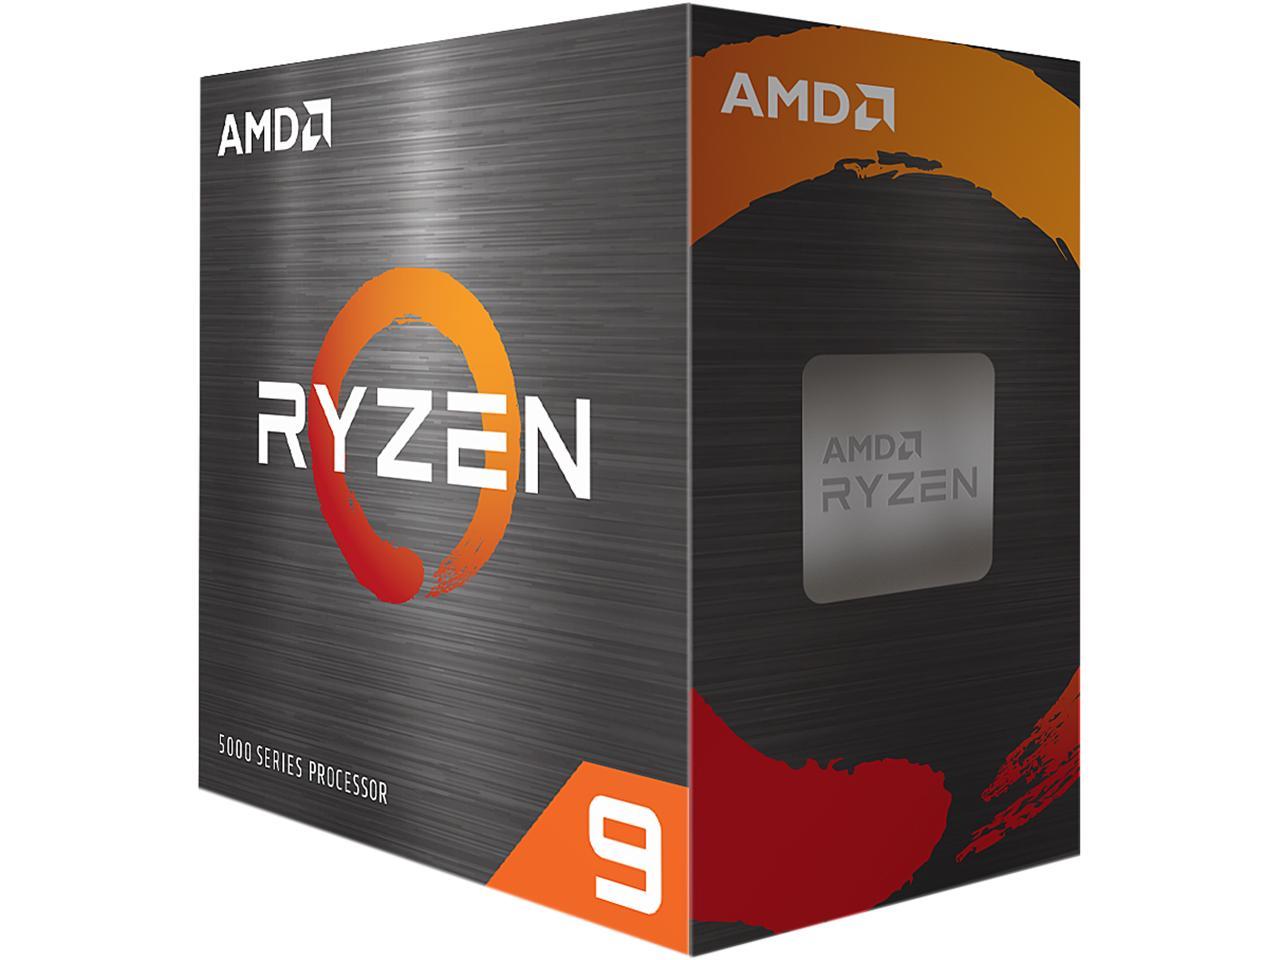 AMD Ryzen 9 5900X AM4 105W Desktop Processor CPU $300 + Free Shipping